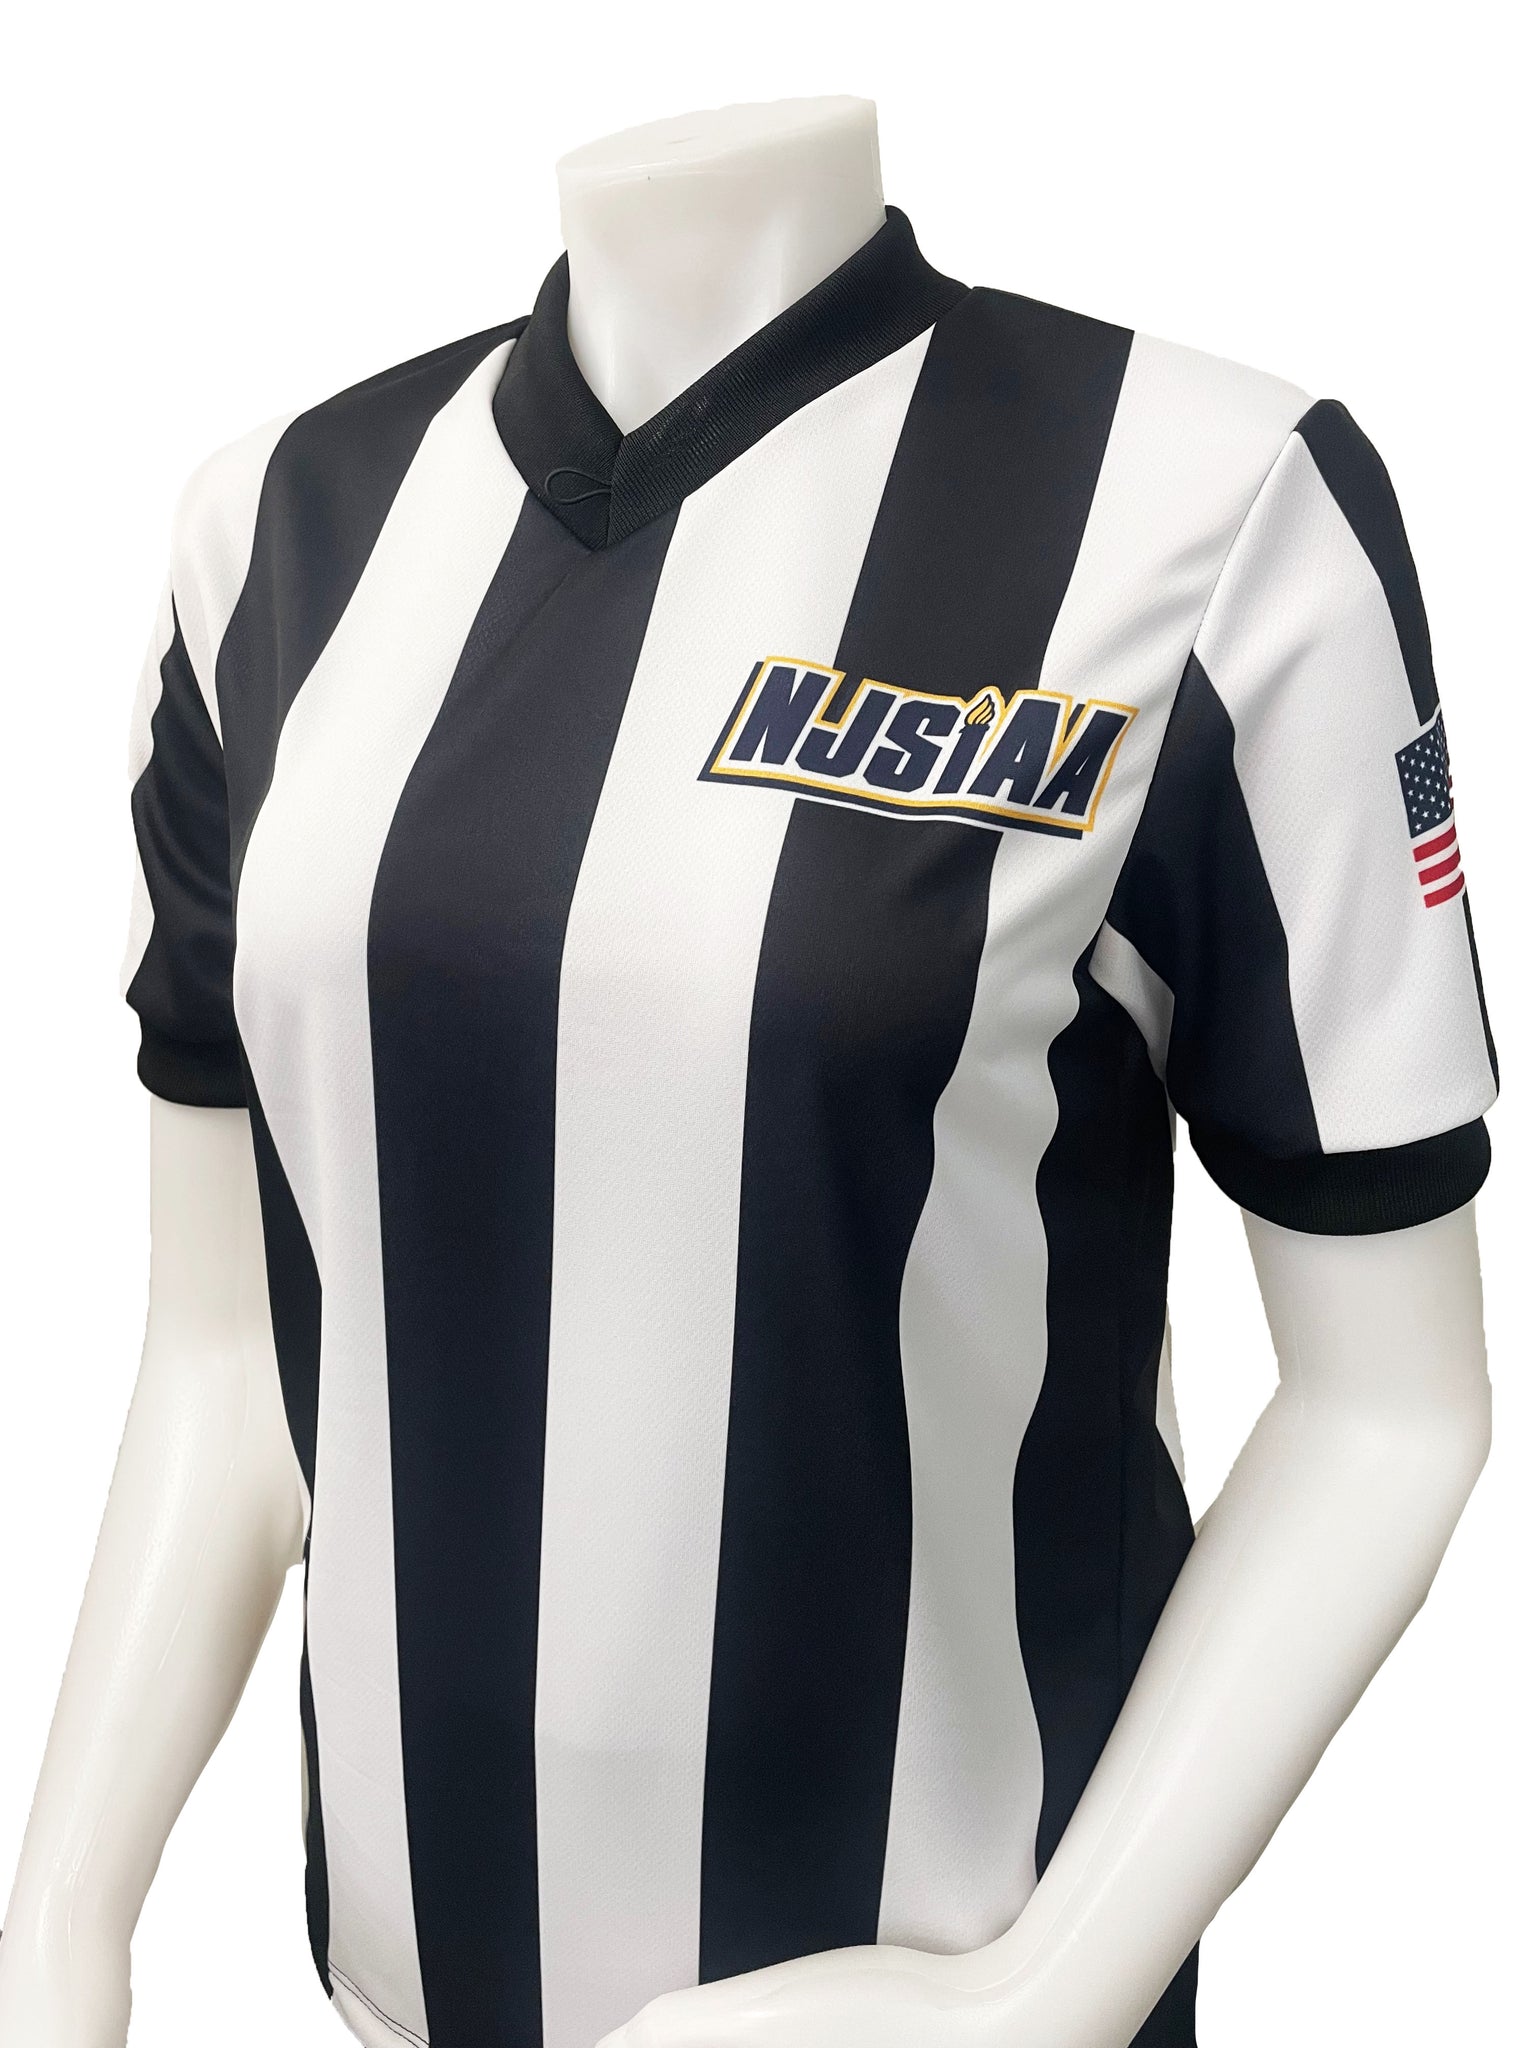 USA239NJ - Smitty "Made in USA" - NJSIAA Women's Basketball 2 1/4" Stripe Short Sleeve Shirt